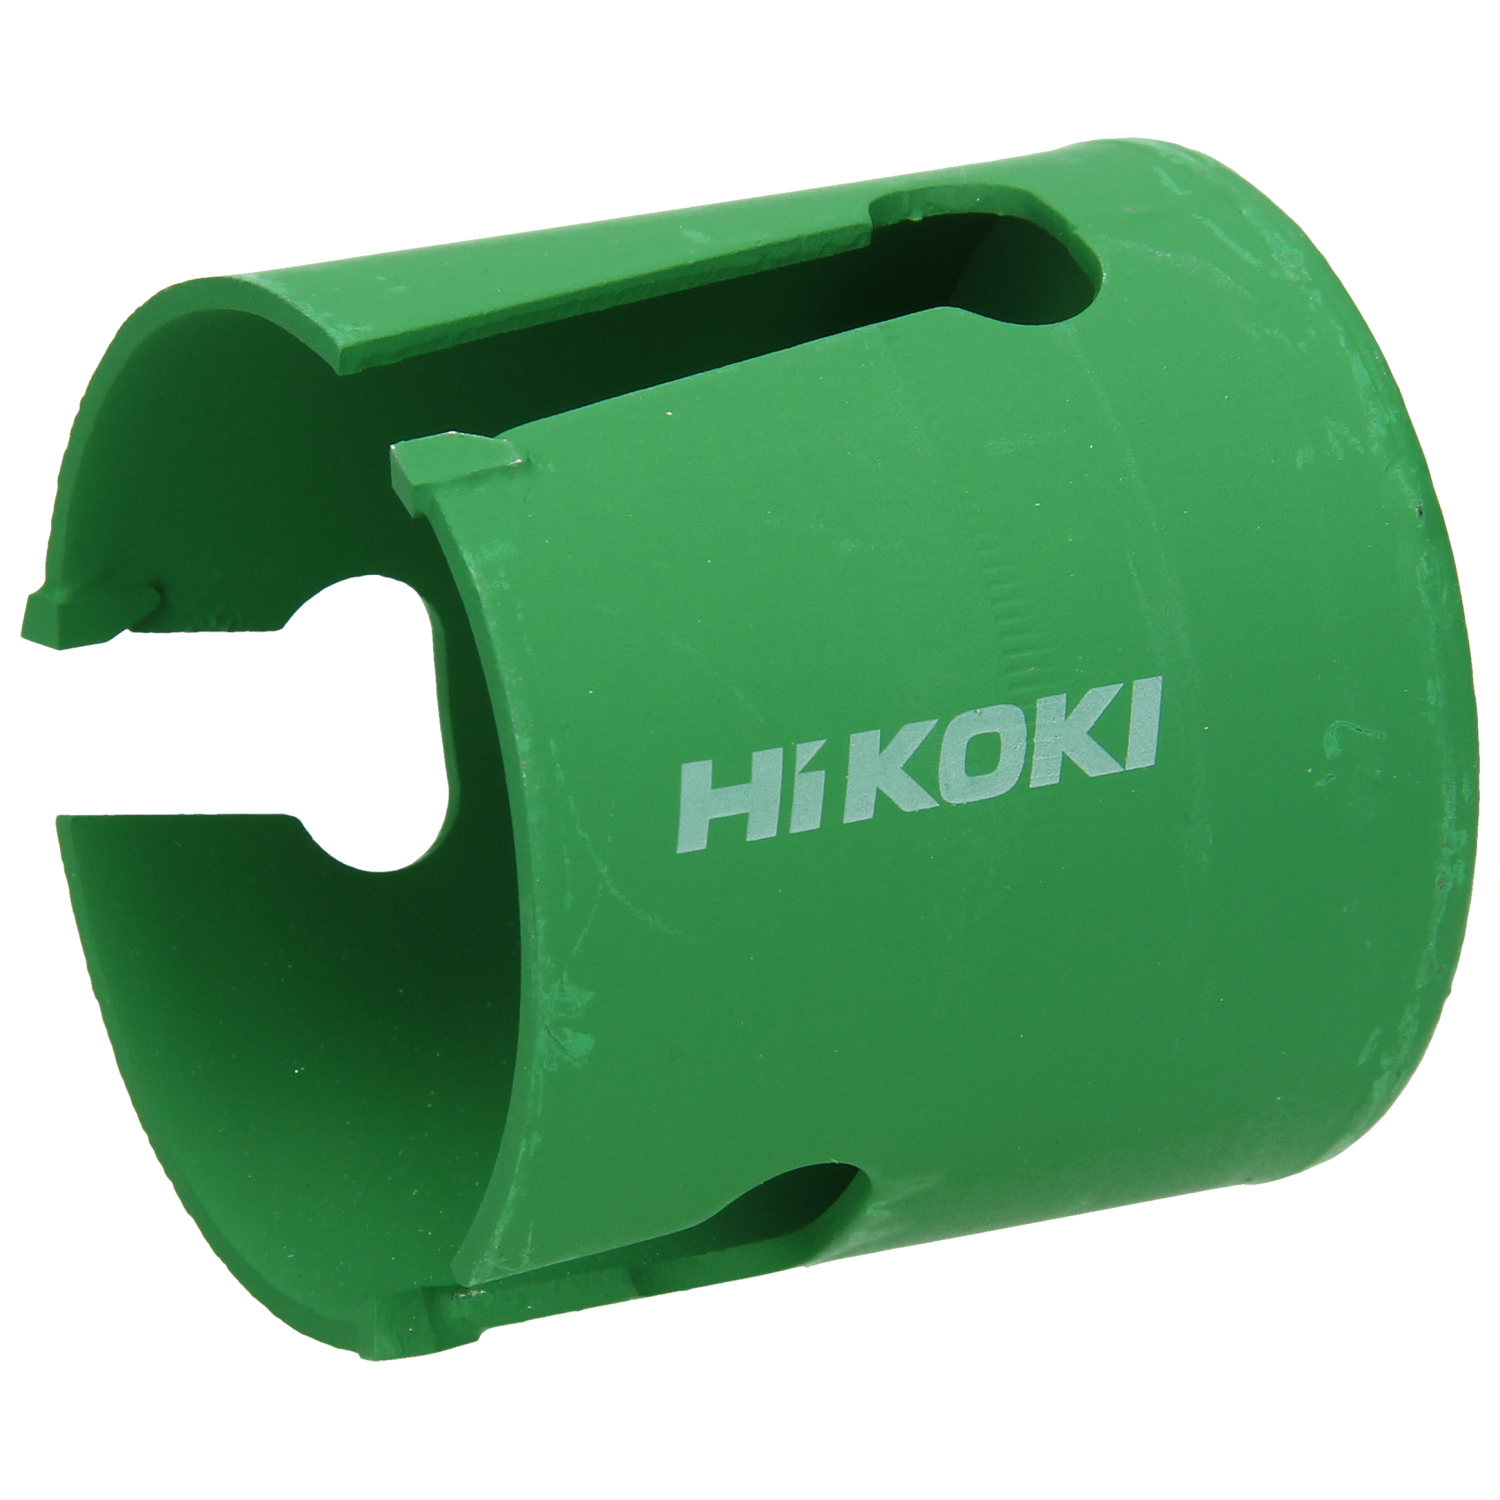 Hikoki HM-Lochsäge 65mm / -754220